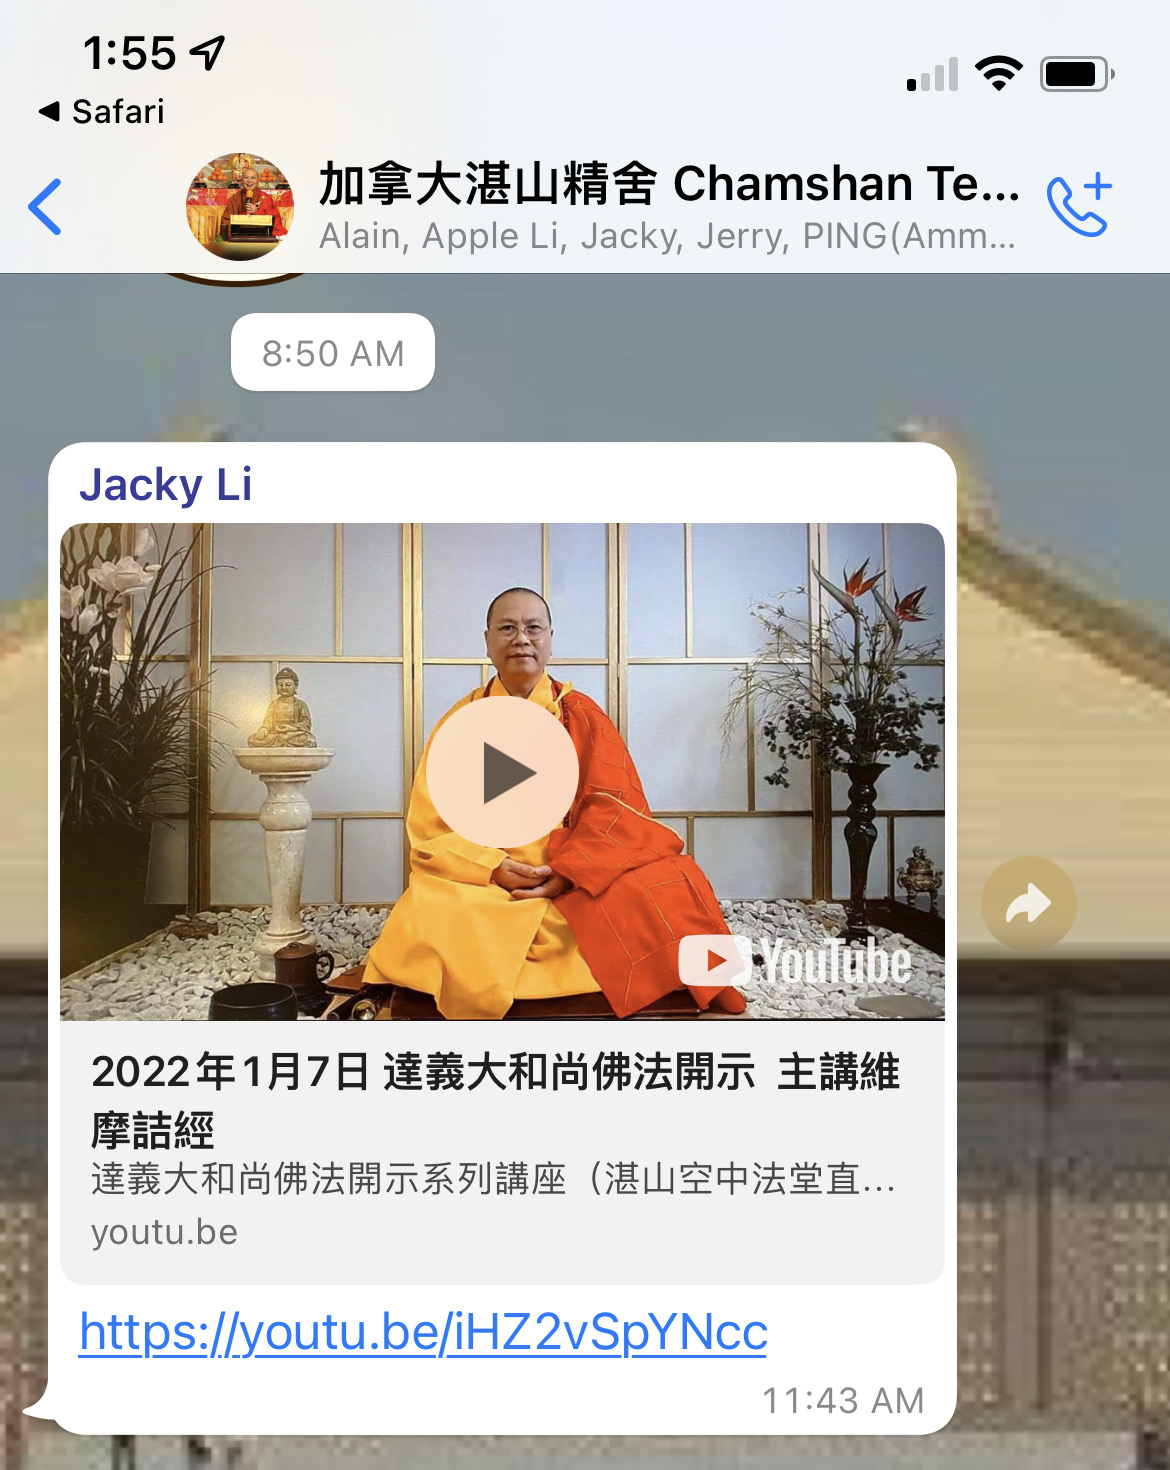 Join Chamshan Temple WhatsApp Group